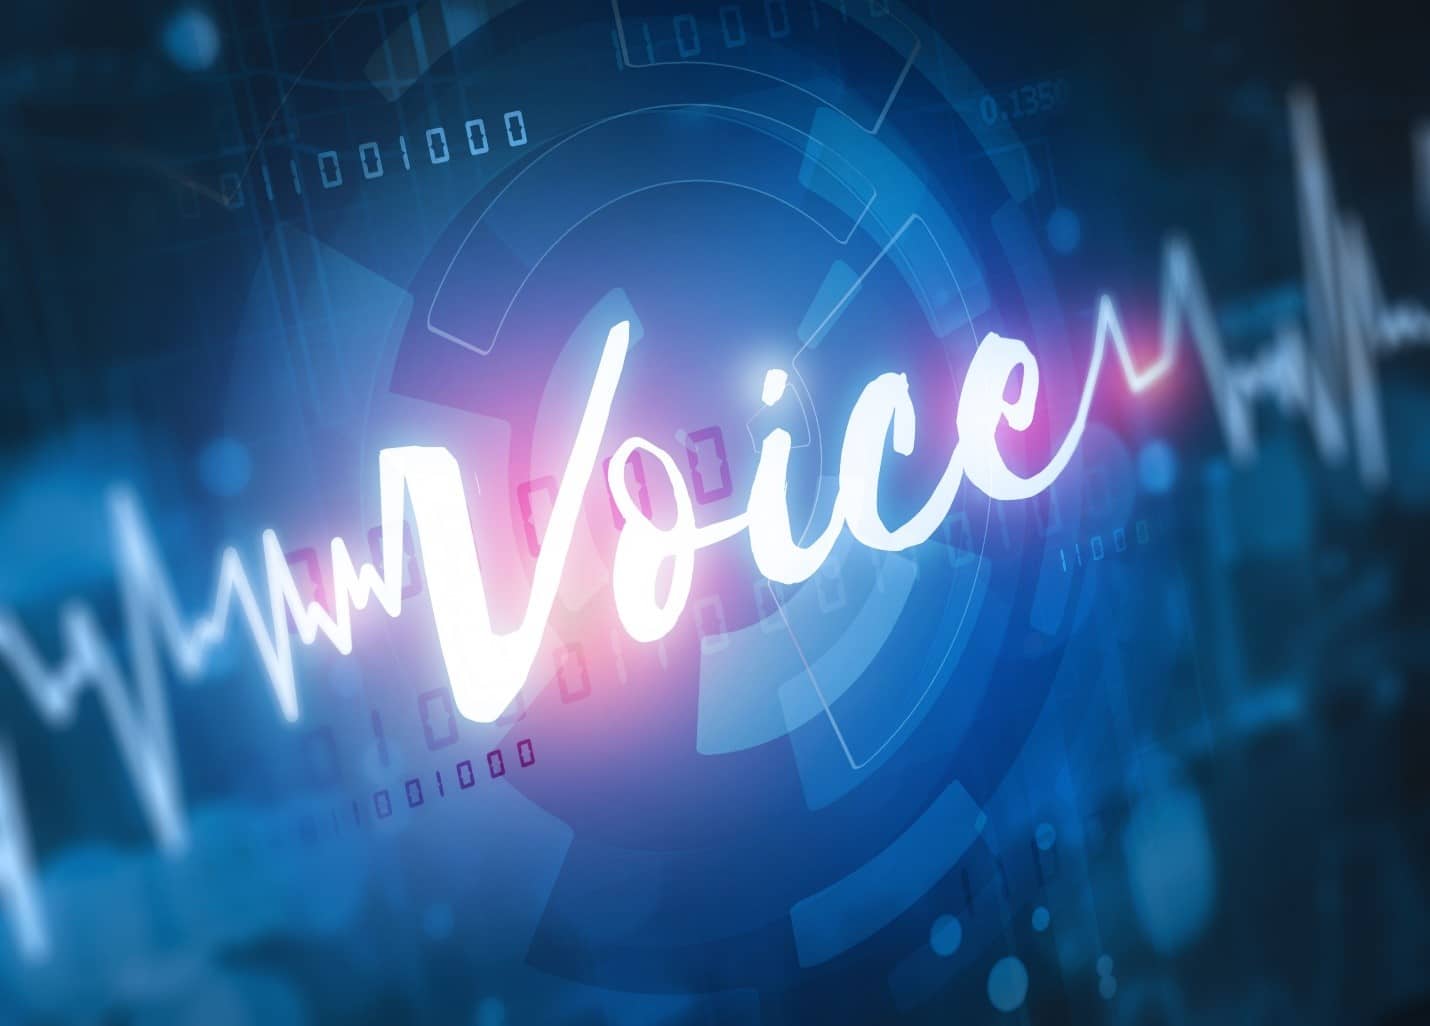 voice biometrics expert witness